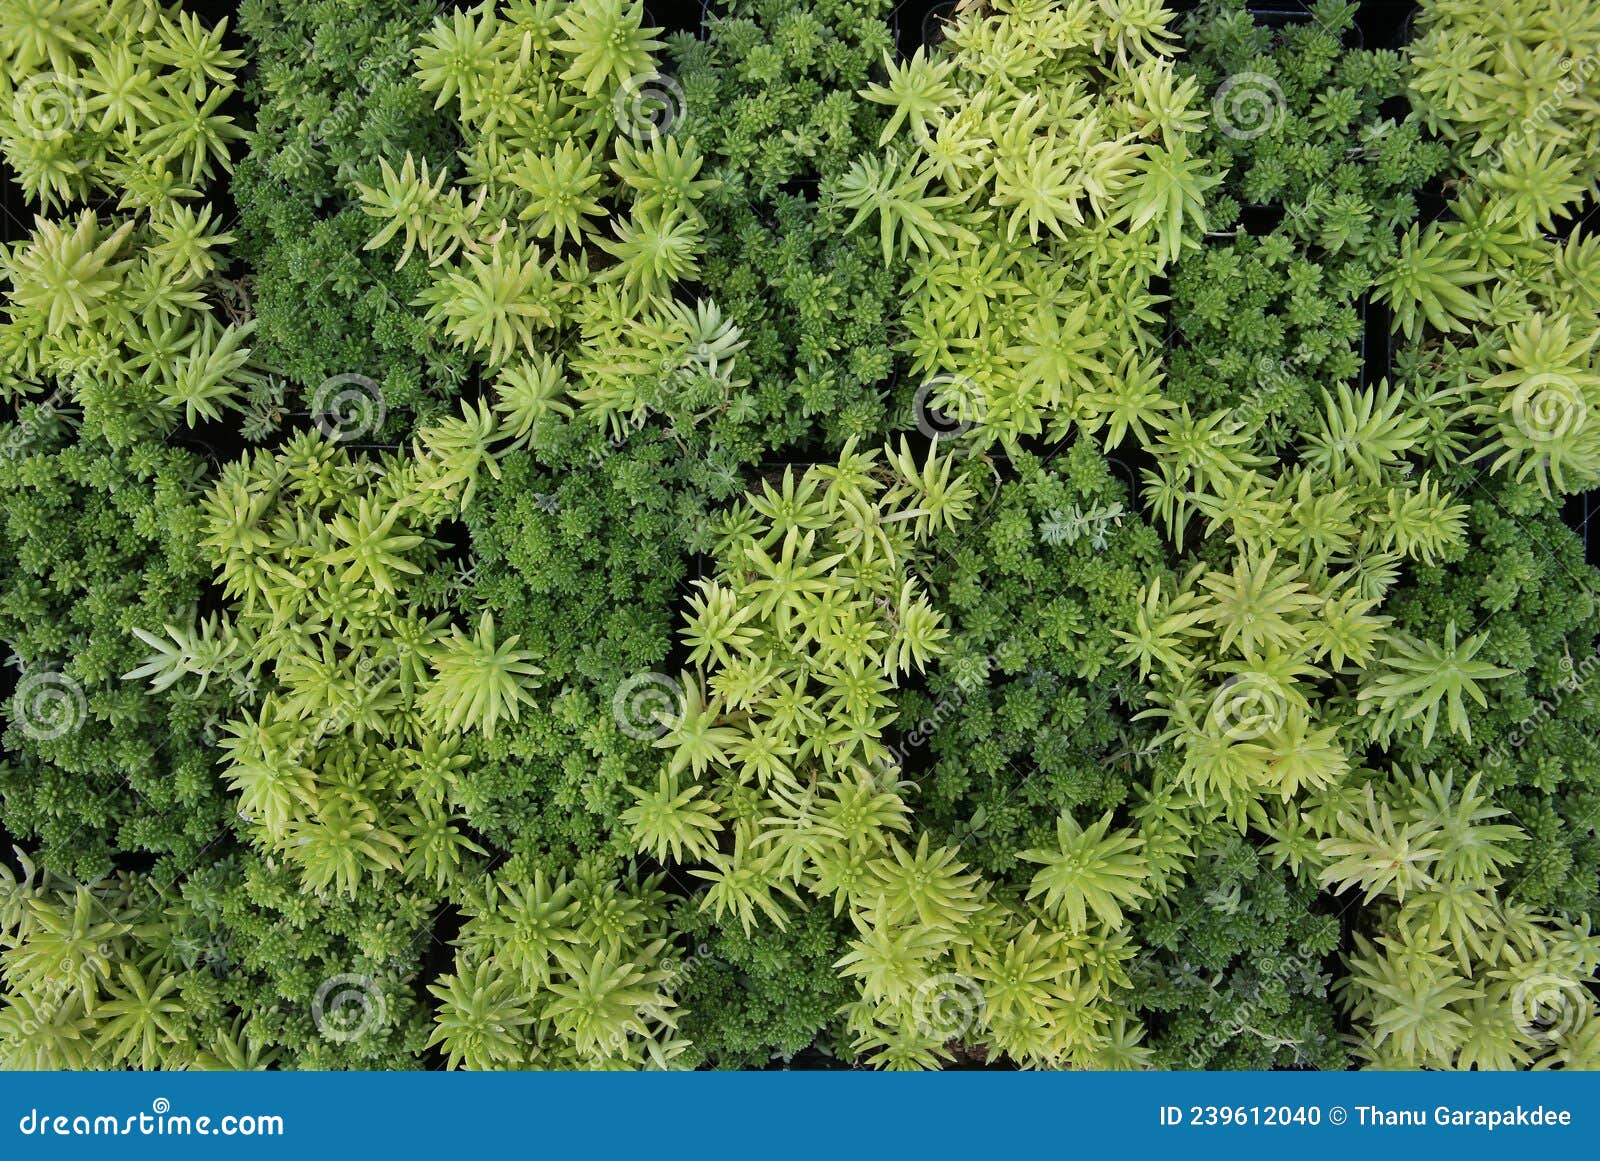 top view of sedum arce and gold moss sedum.